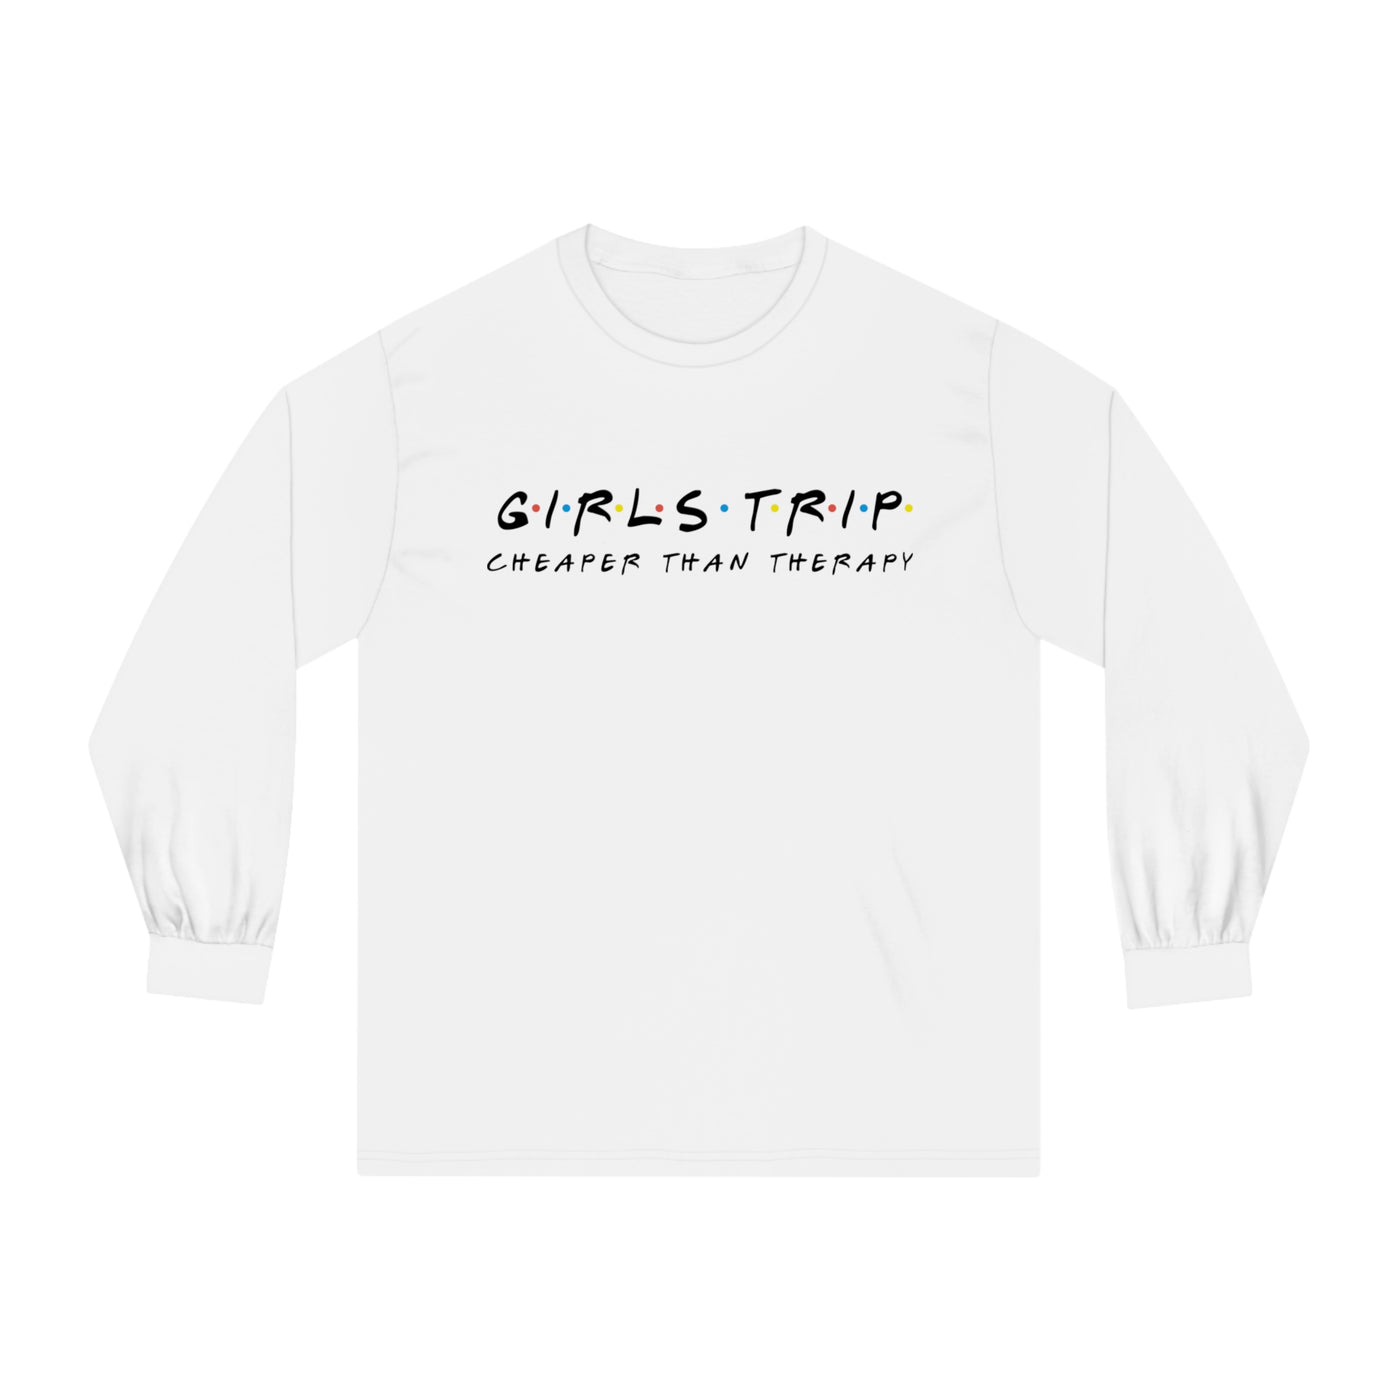 Girls Trip Cheaper than Therapy Unisex Classic Long Sleeve T-Shirt